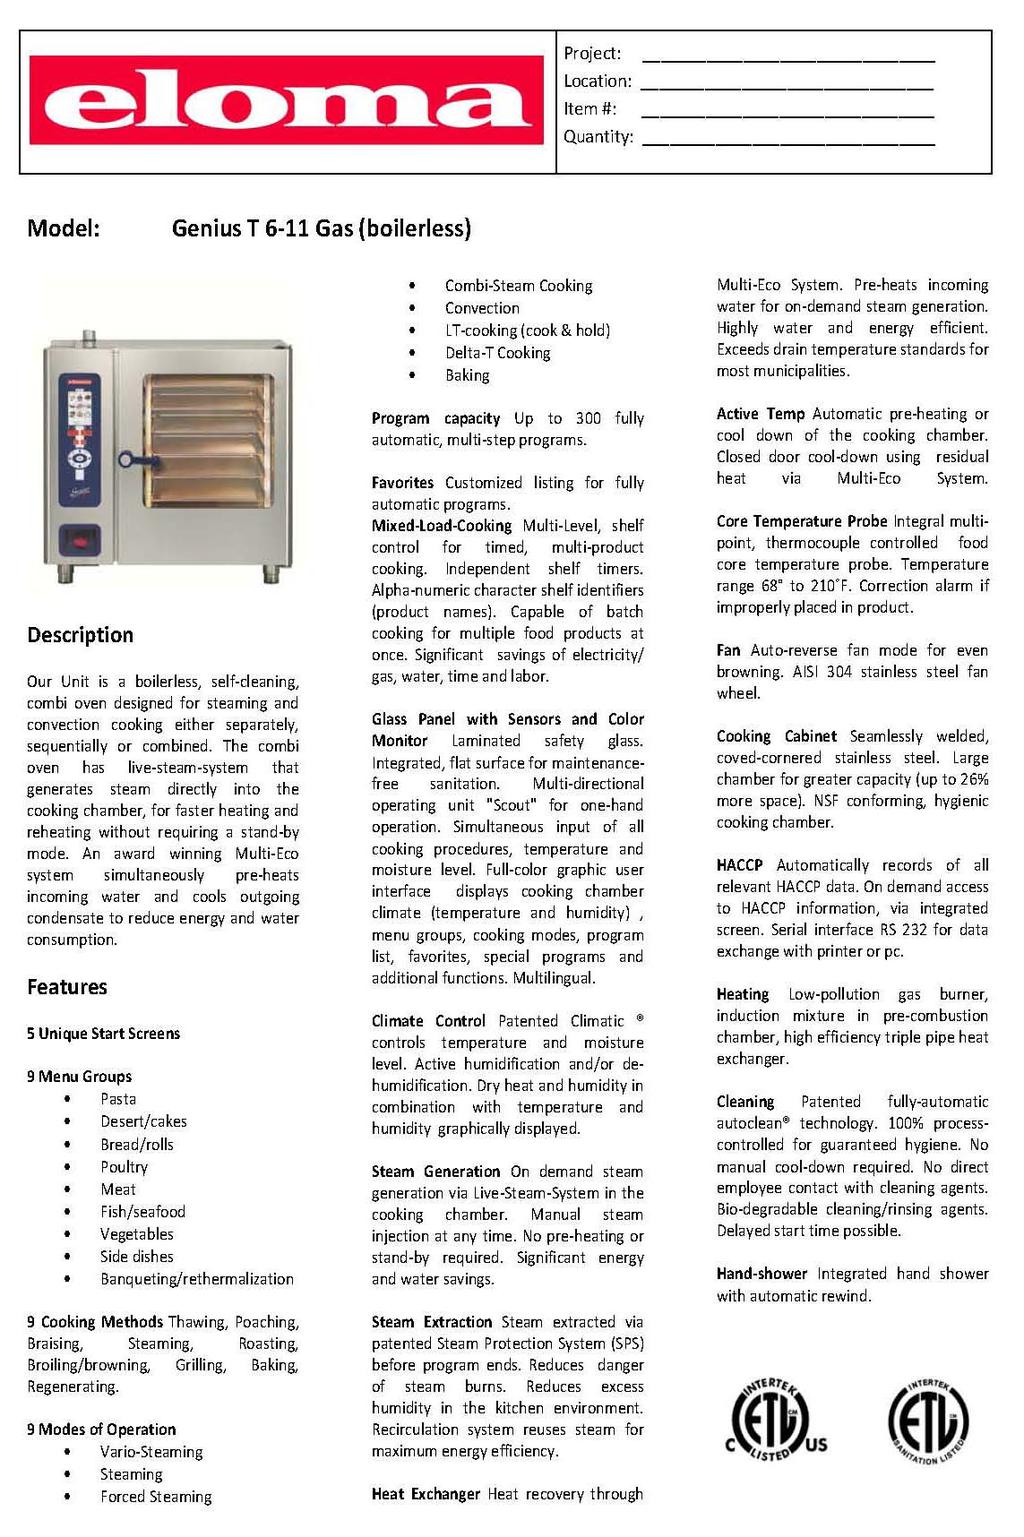 Appliance Specifications 12949 Alcosta Blvd.